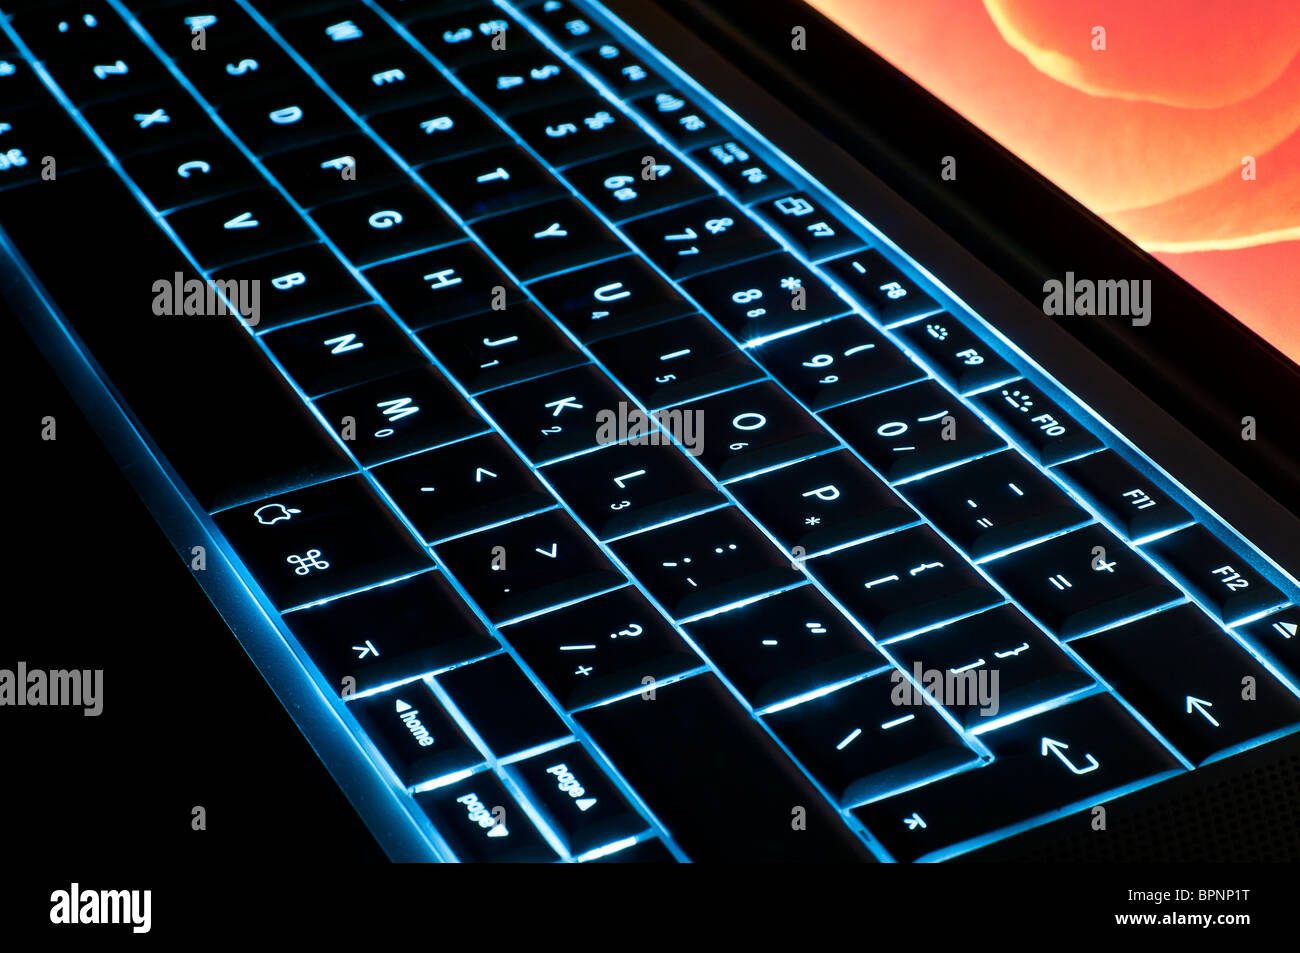 computer laptop keyboard close up detail of keys and symbols Stock Photo